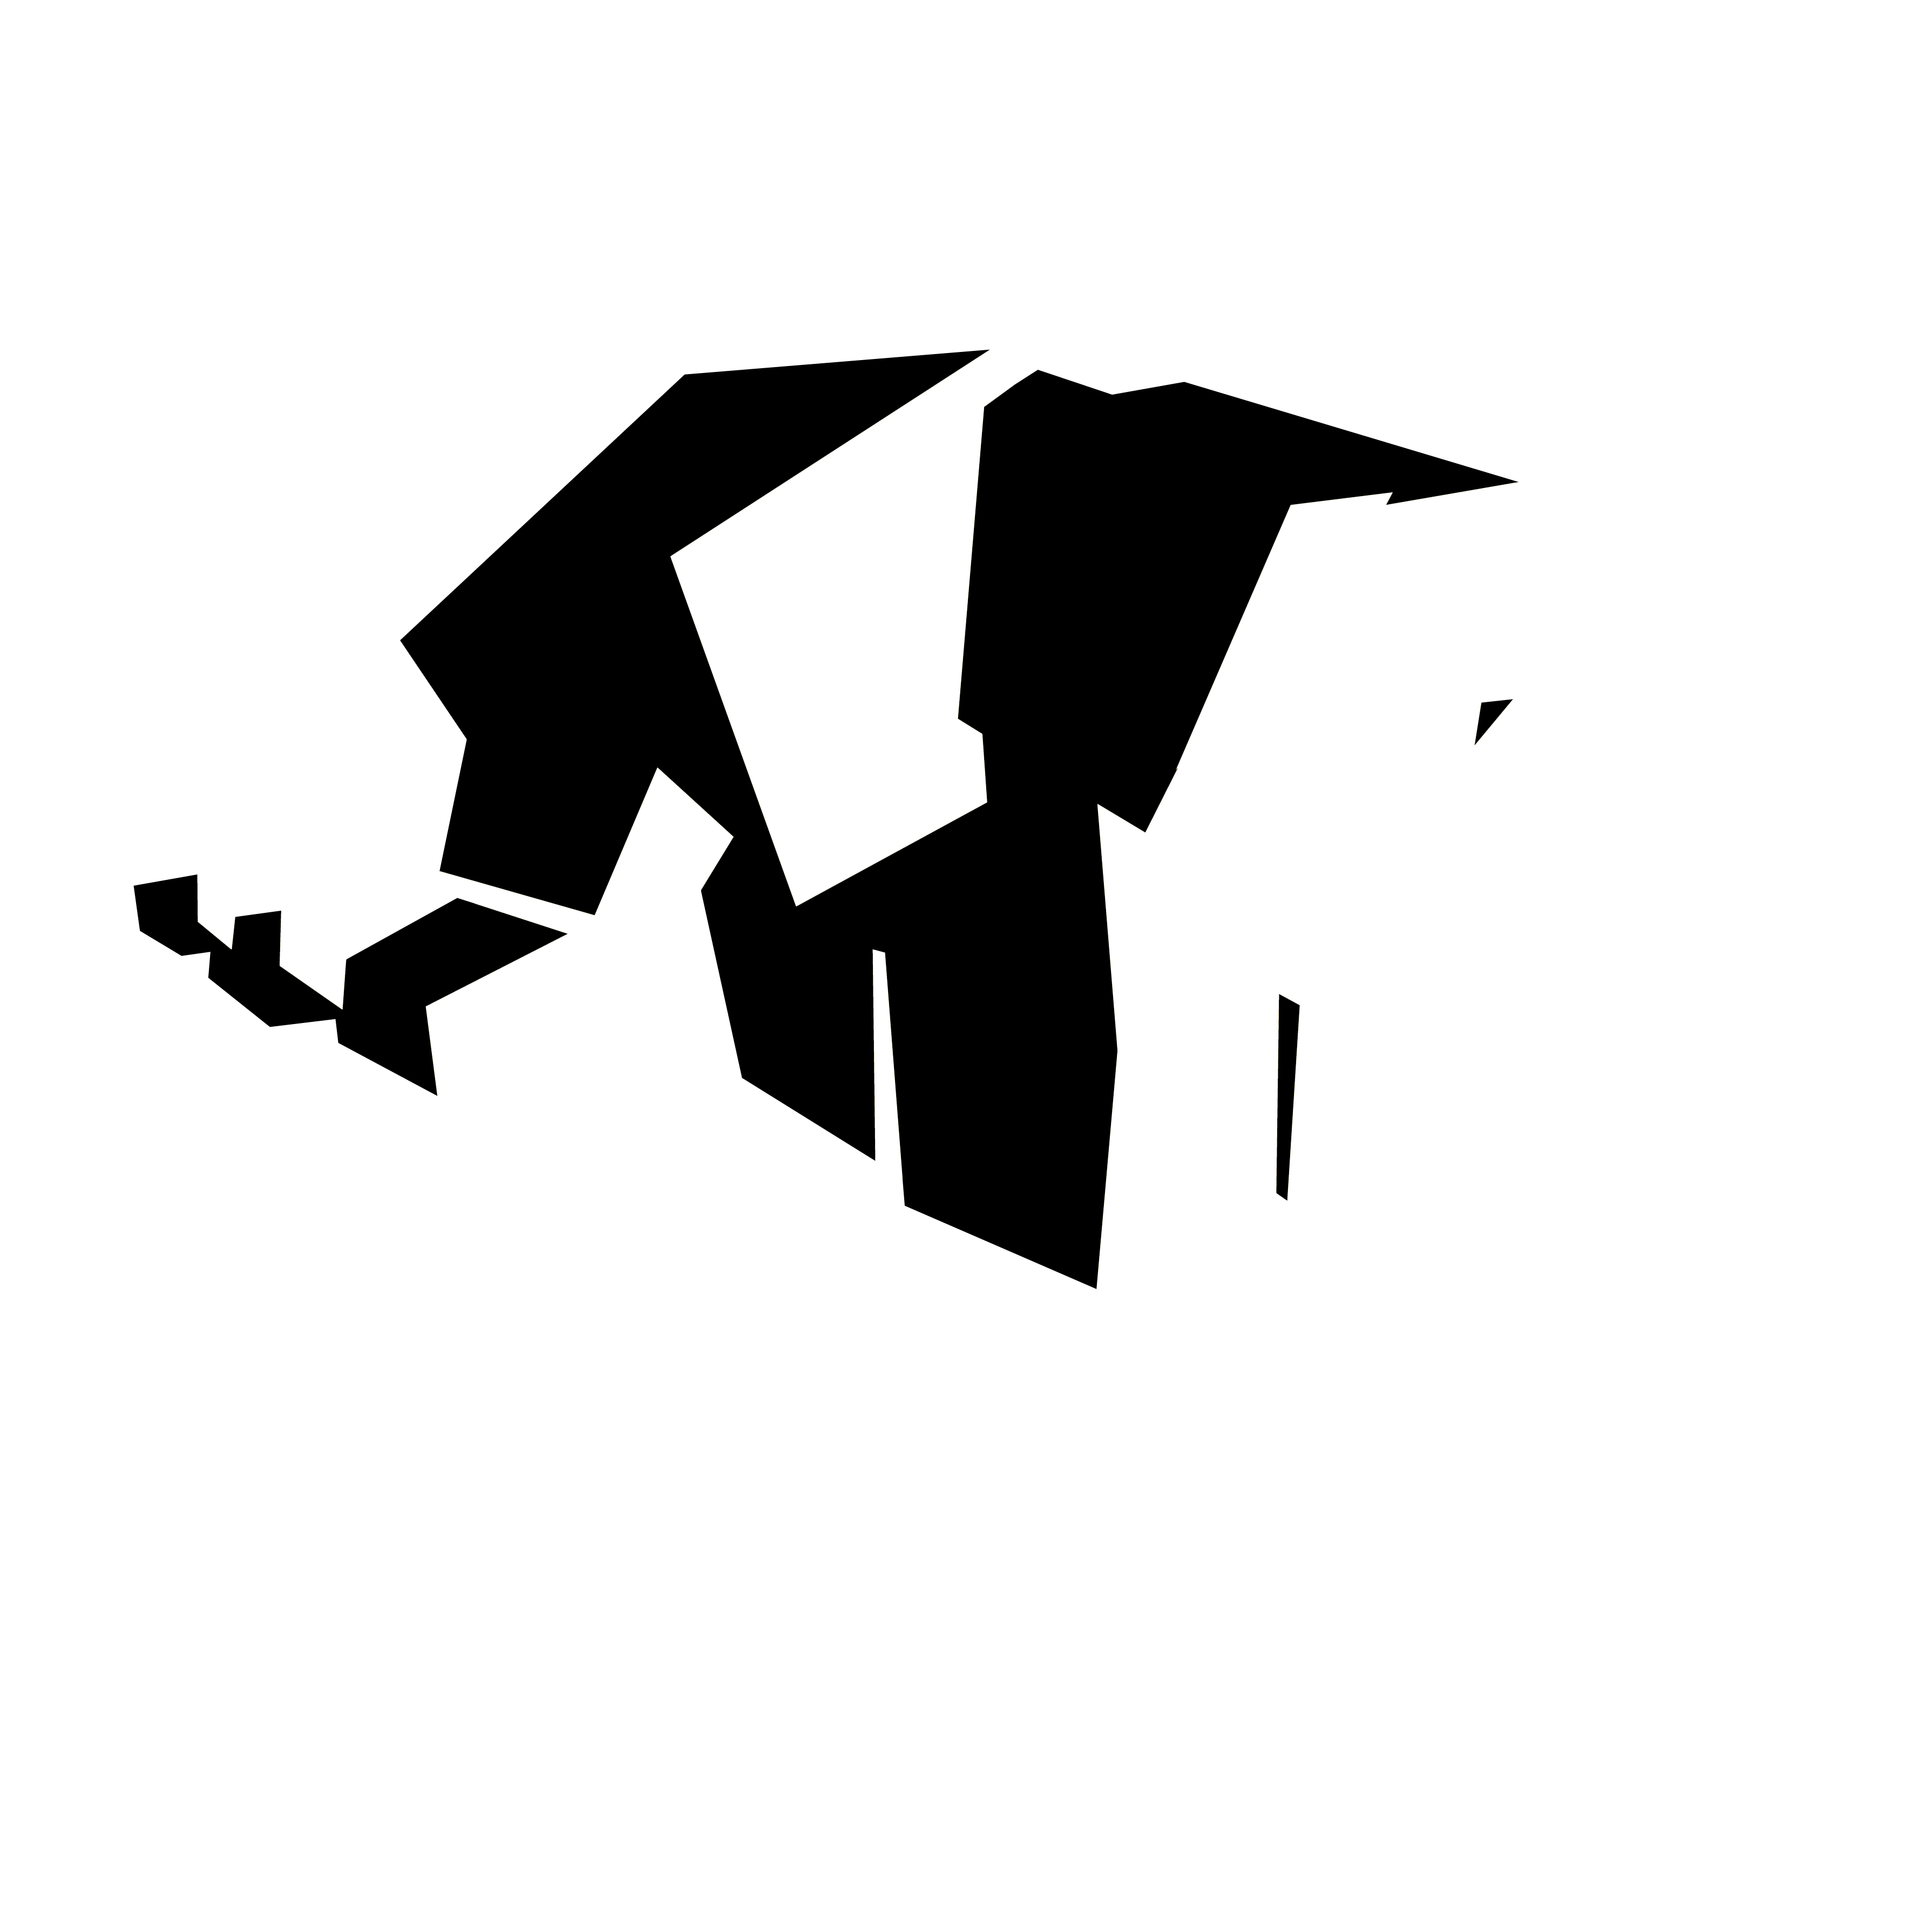 logo Tate Multimedia